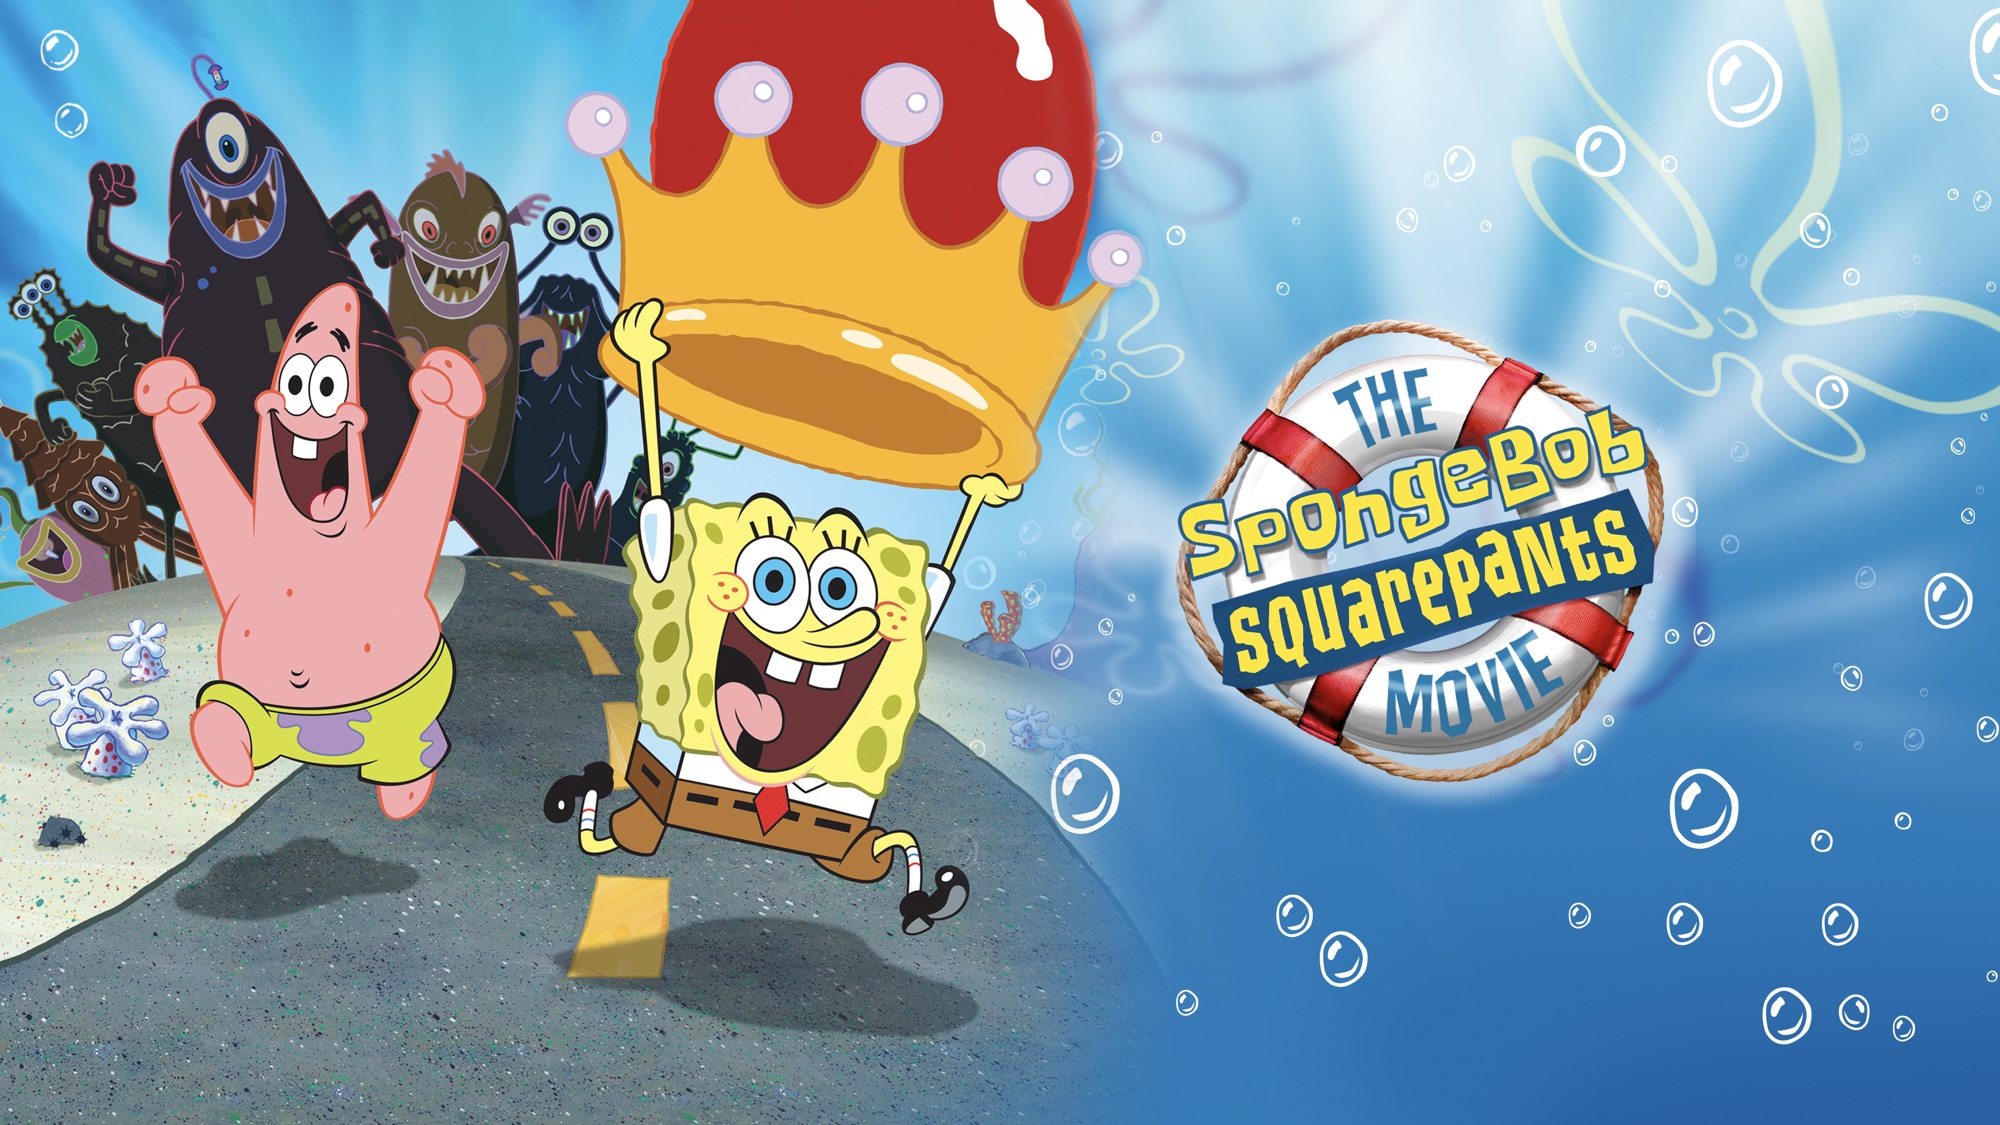 spongebob squarepants movie poster